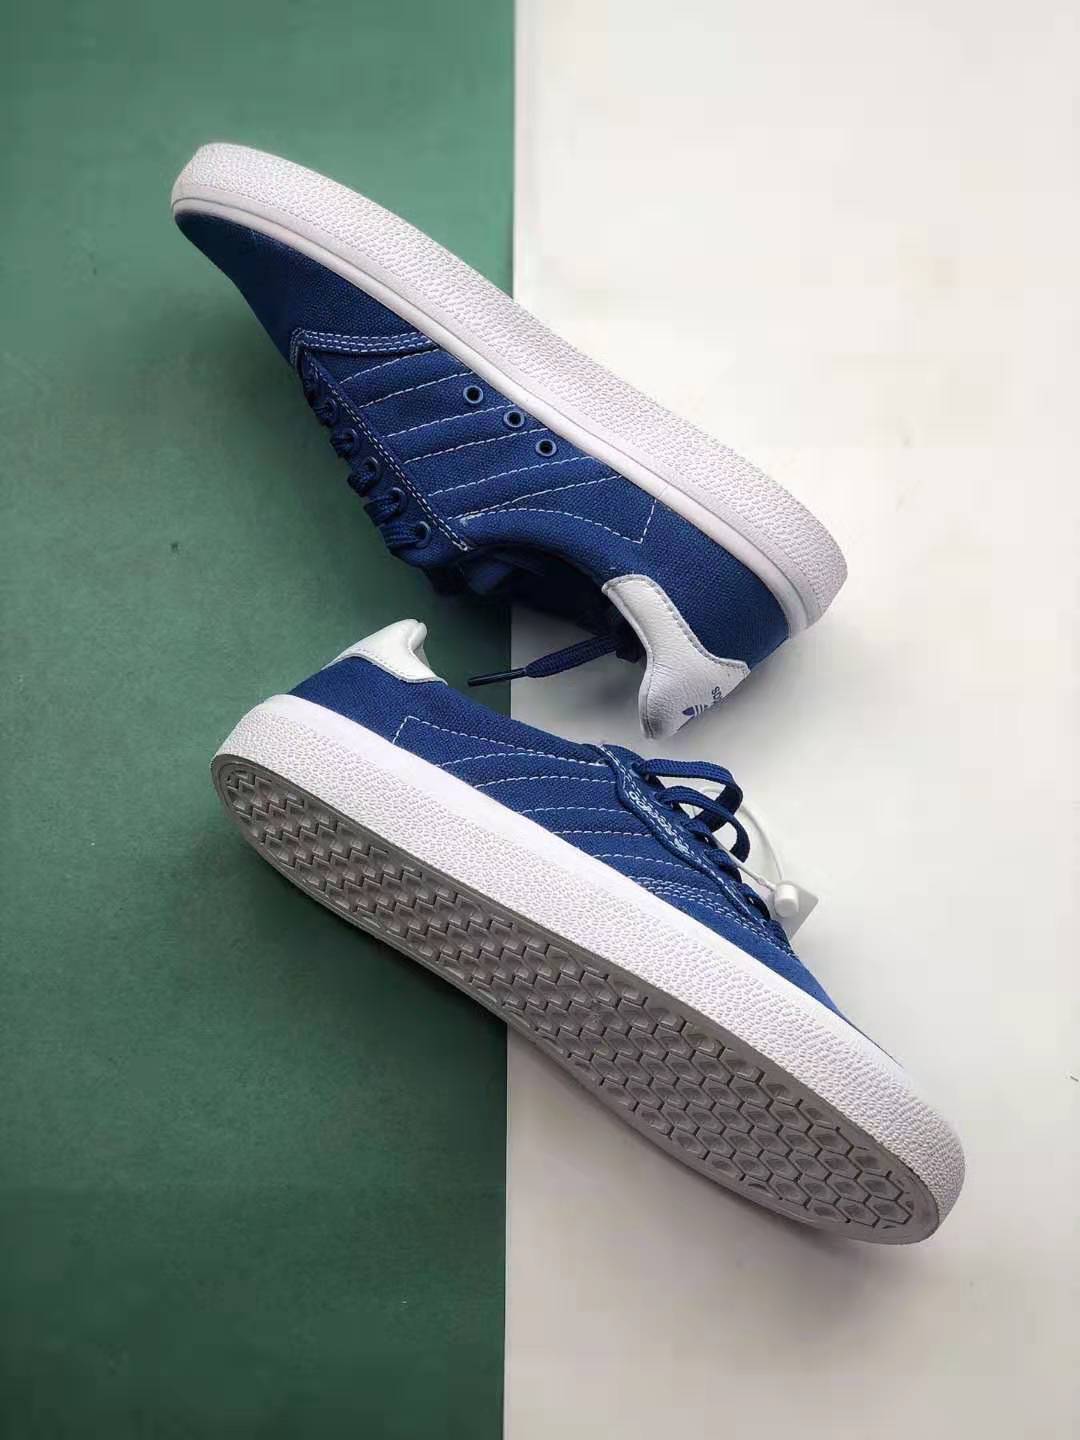 Adidas Originals 3MC Vulc Shoes Blue G28192 - Stylish & comfortable sneakers